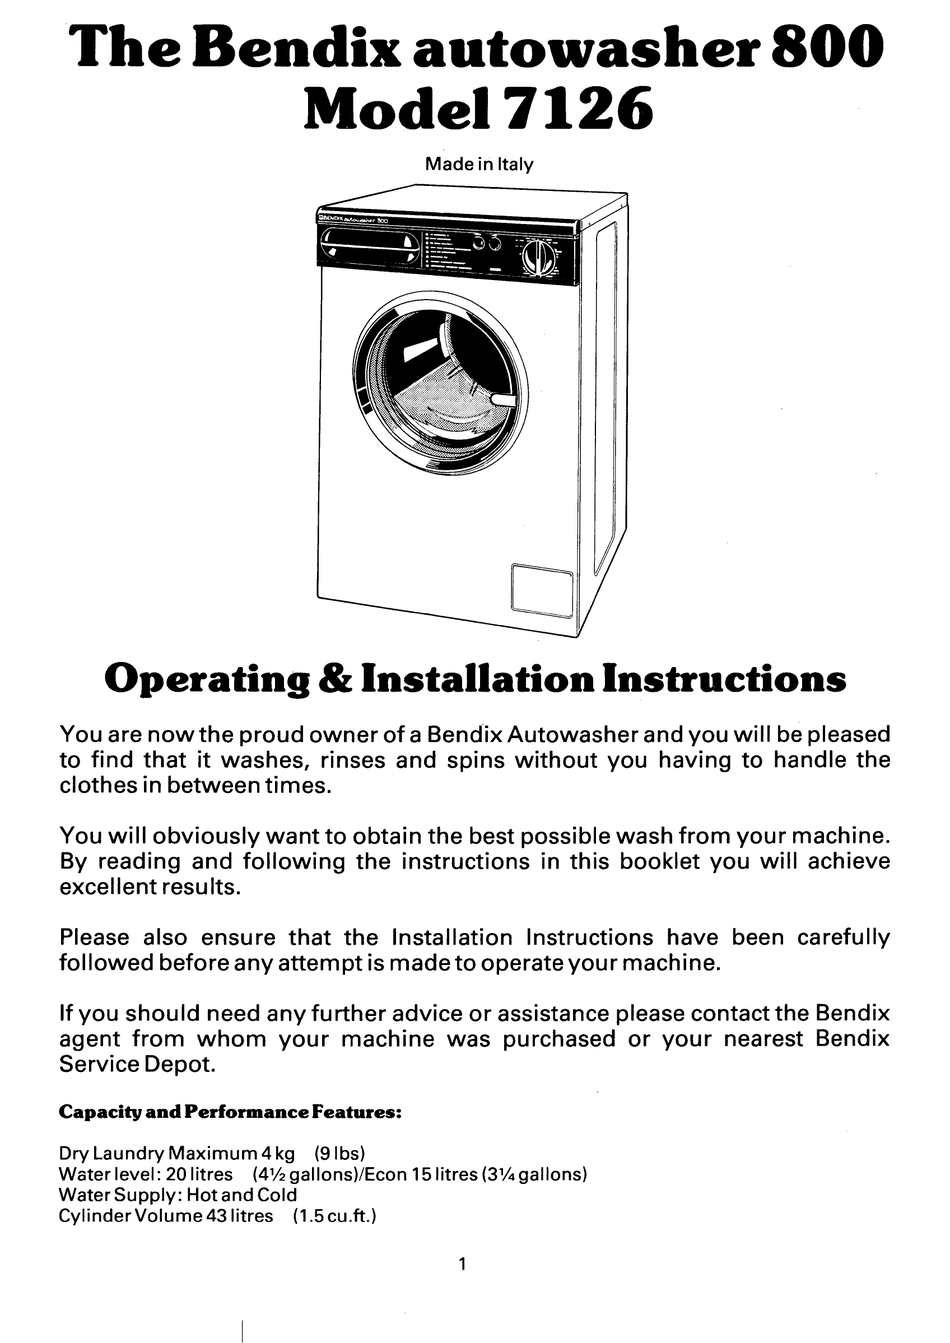 bendix-7126-operating-installation-instructions-manual-pdf-download